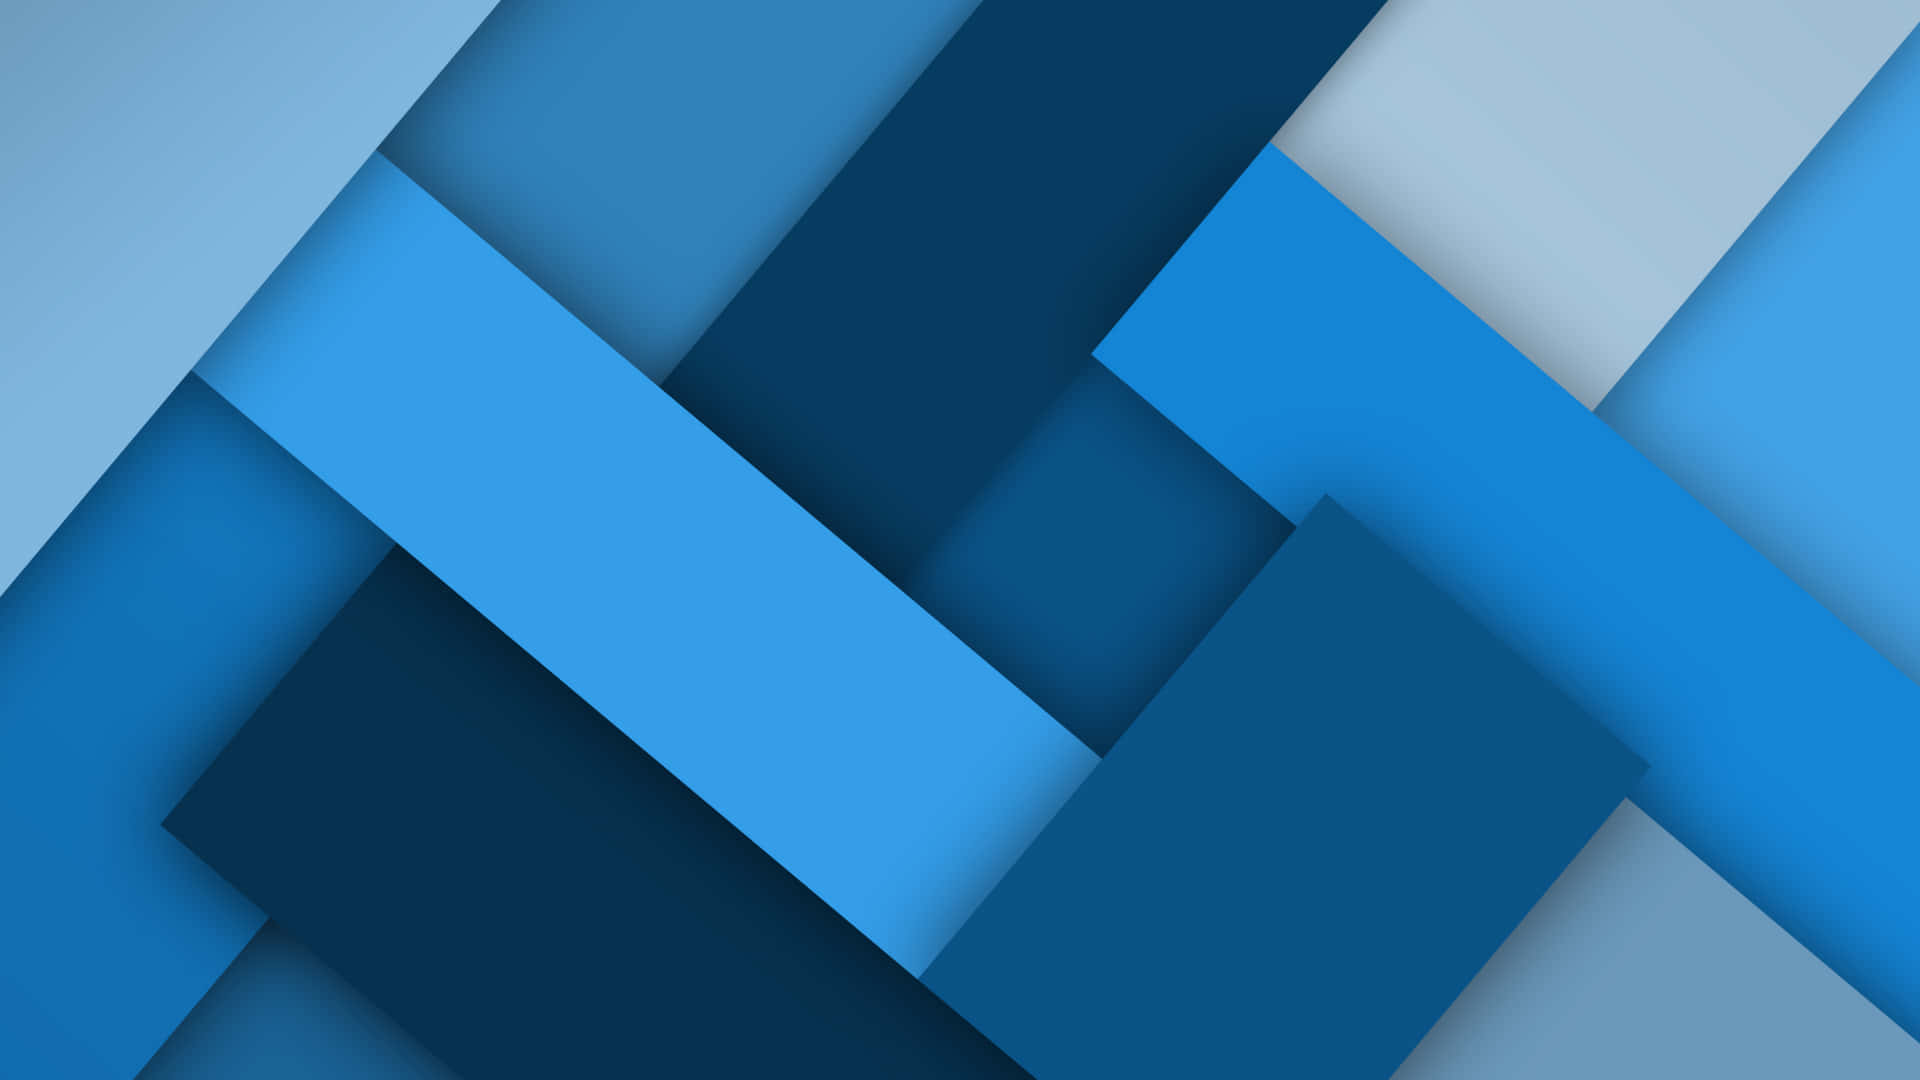 Einbuntes Abstraktes Design In Blau.